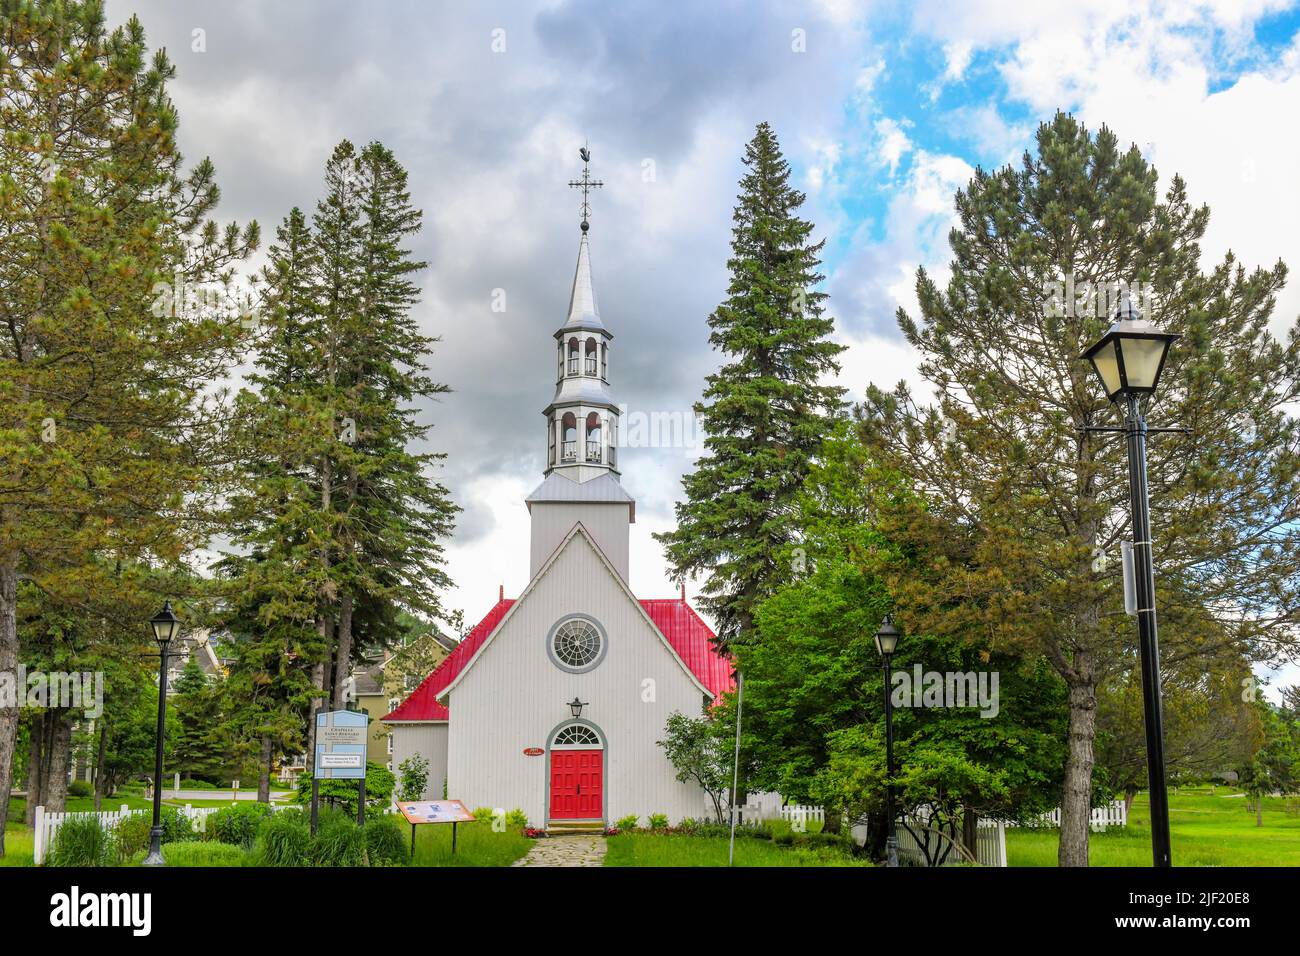 Histórica iglesia de madera, pueblo peatonal de Mont Tremblant, Mont Tremblant. Laurentianas, Quebec, Canadá Foto de stock